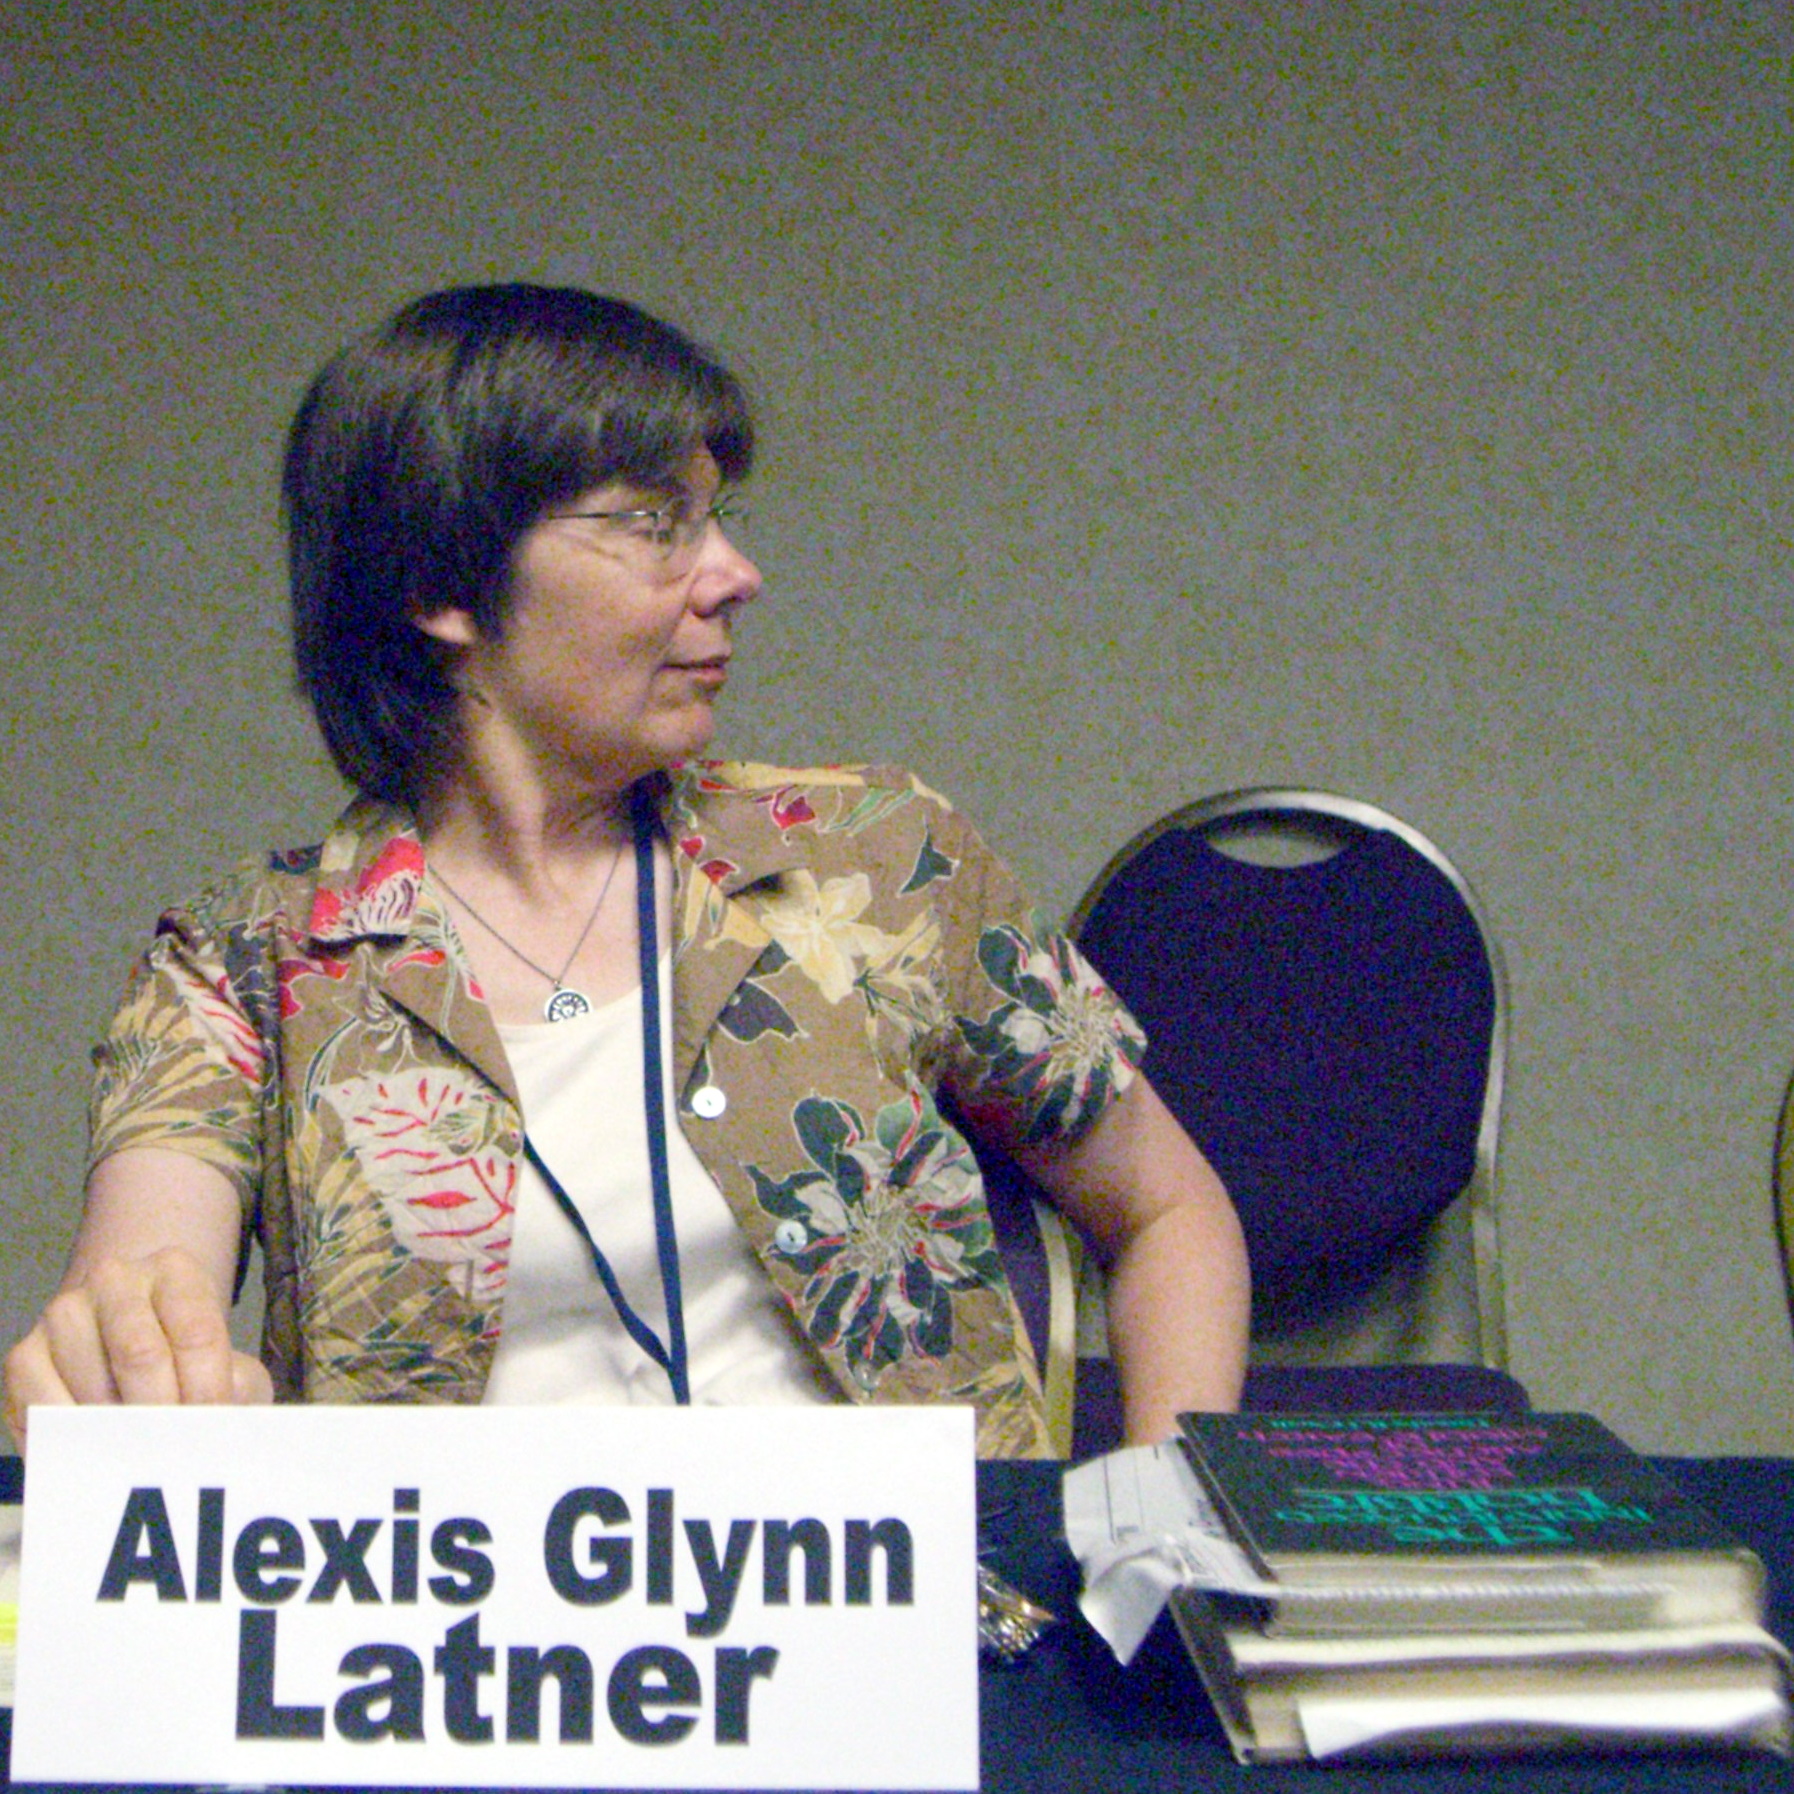 Alexis Glynn Latner at ApolloCon 2007